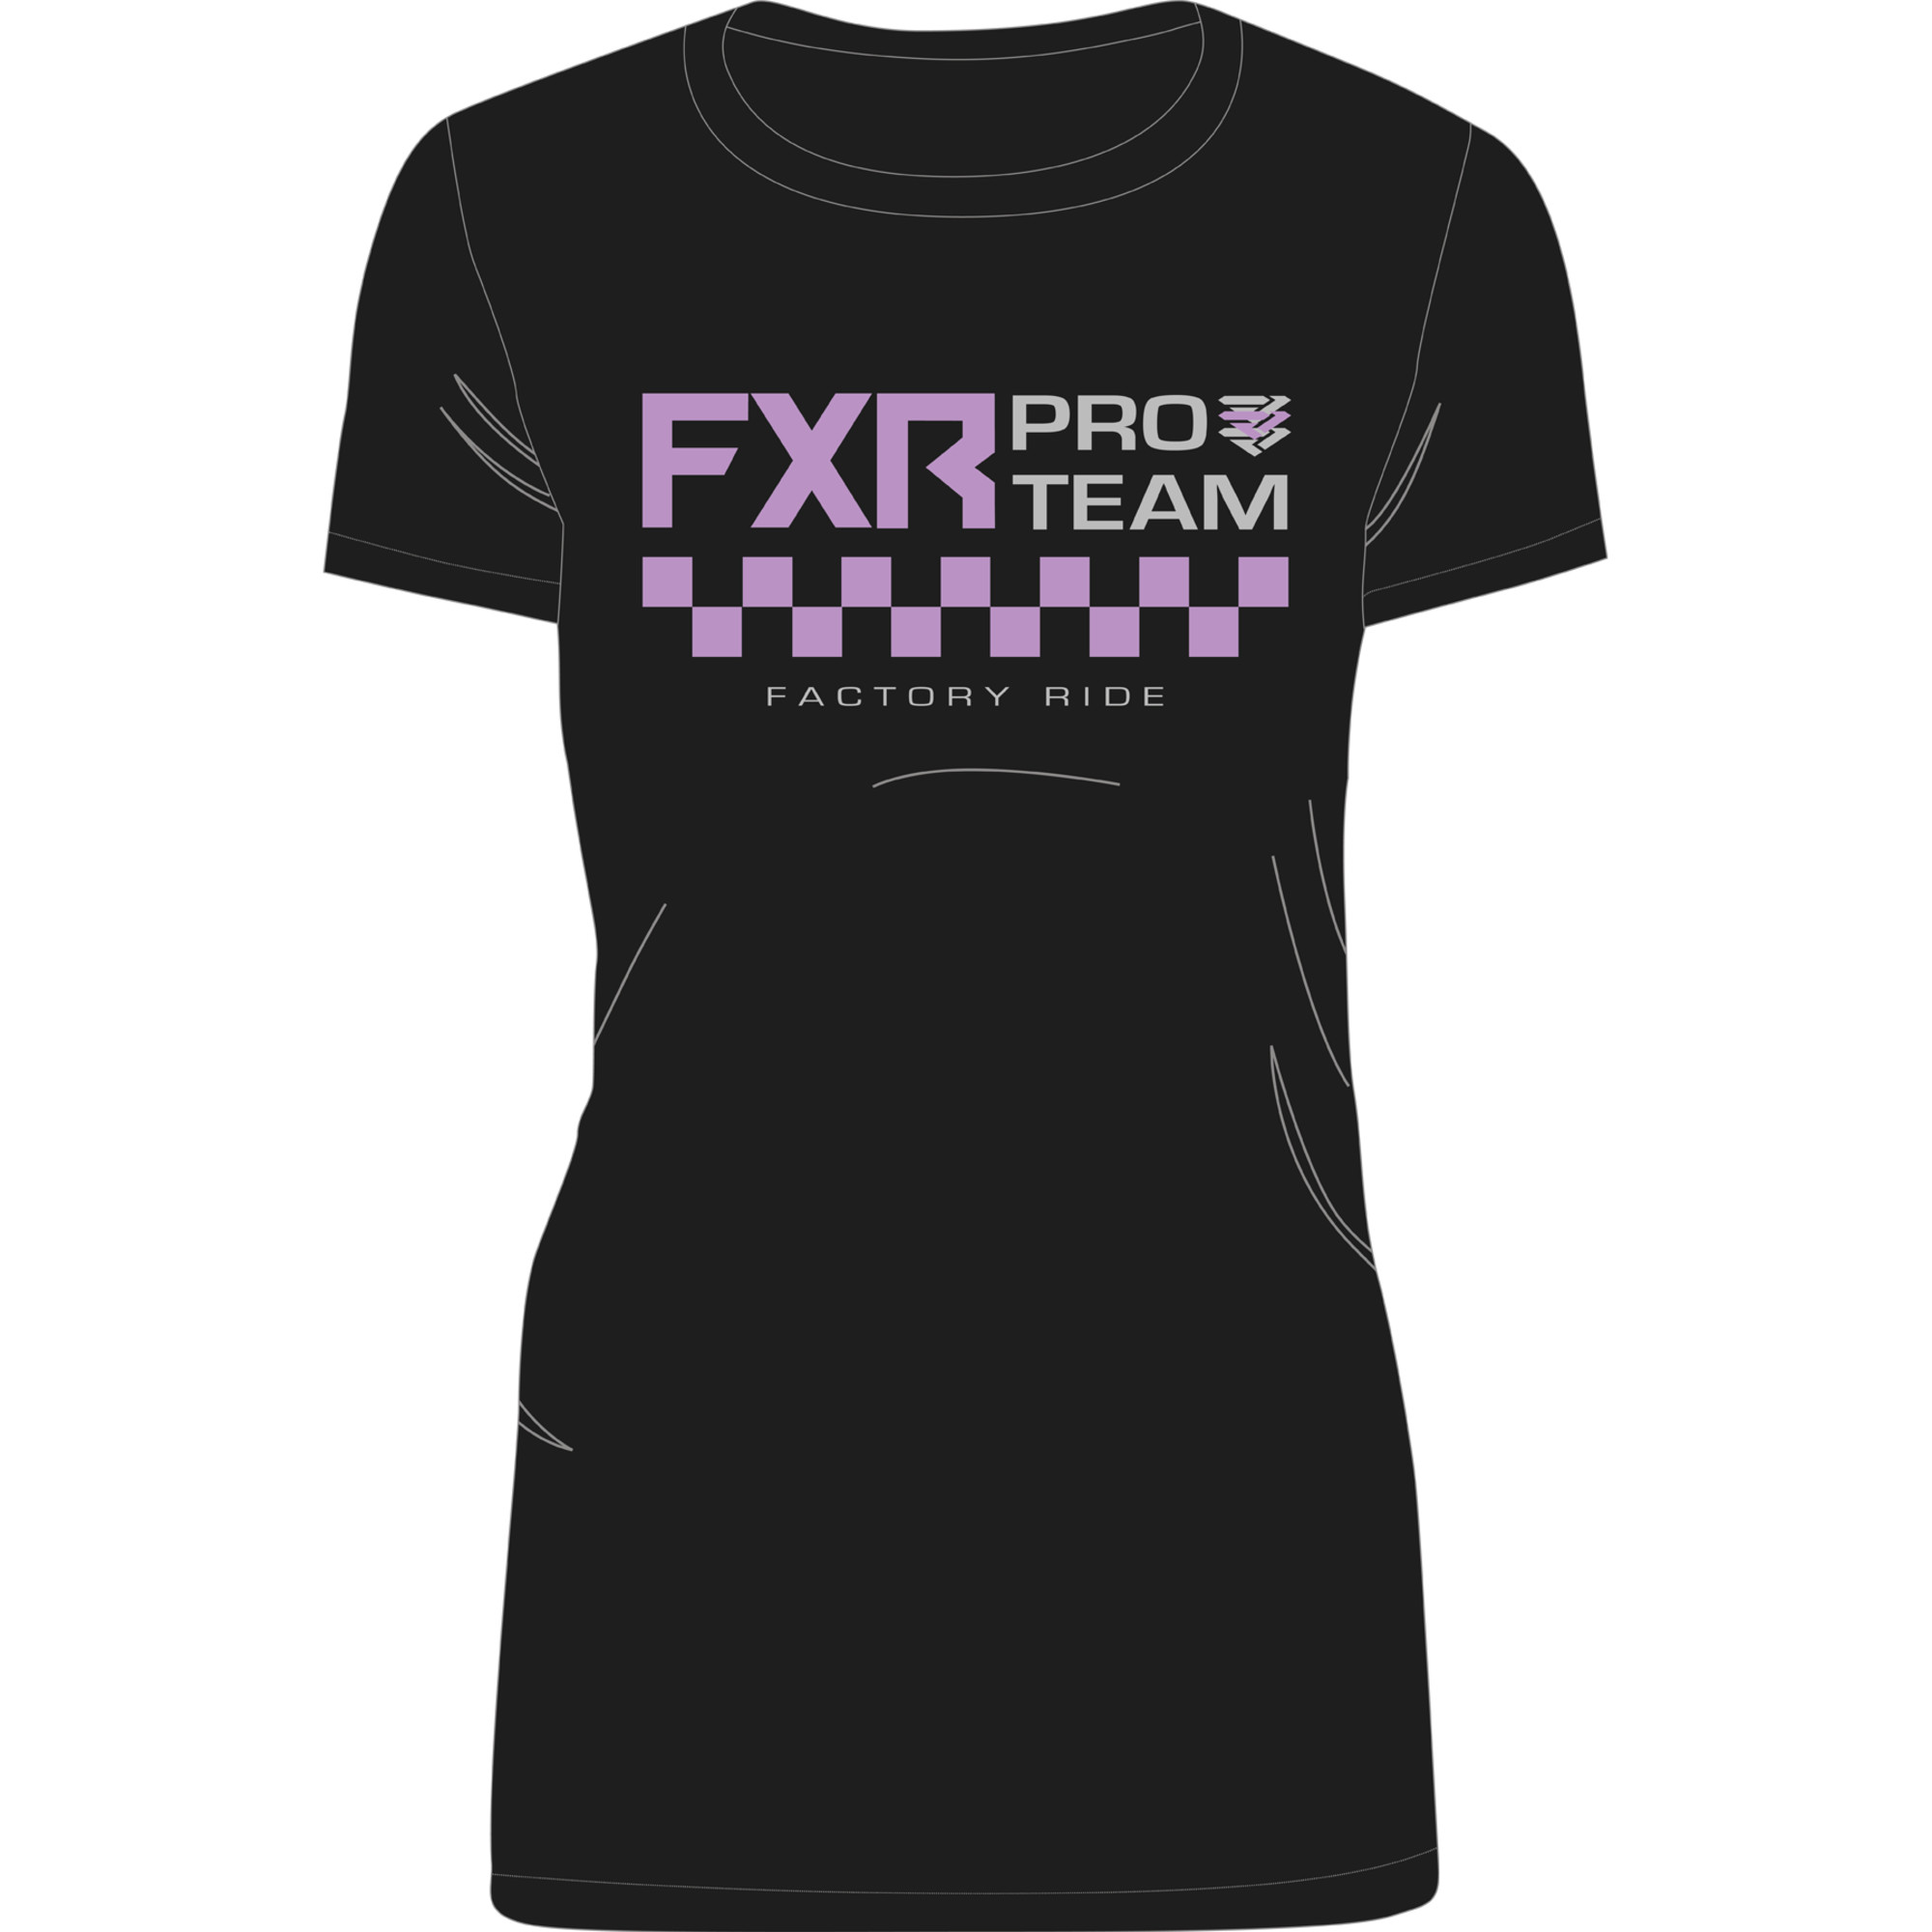 fxr racing t-shirt shirts for kids team girls